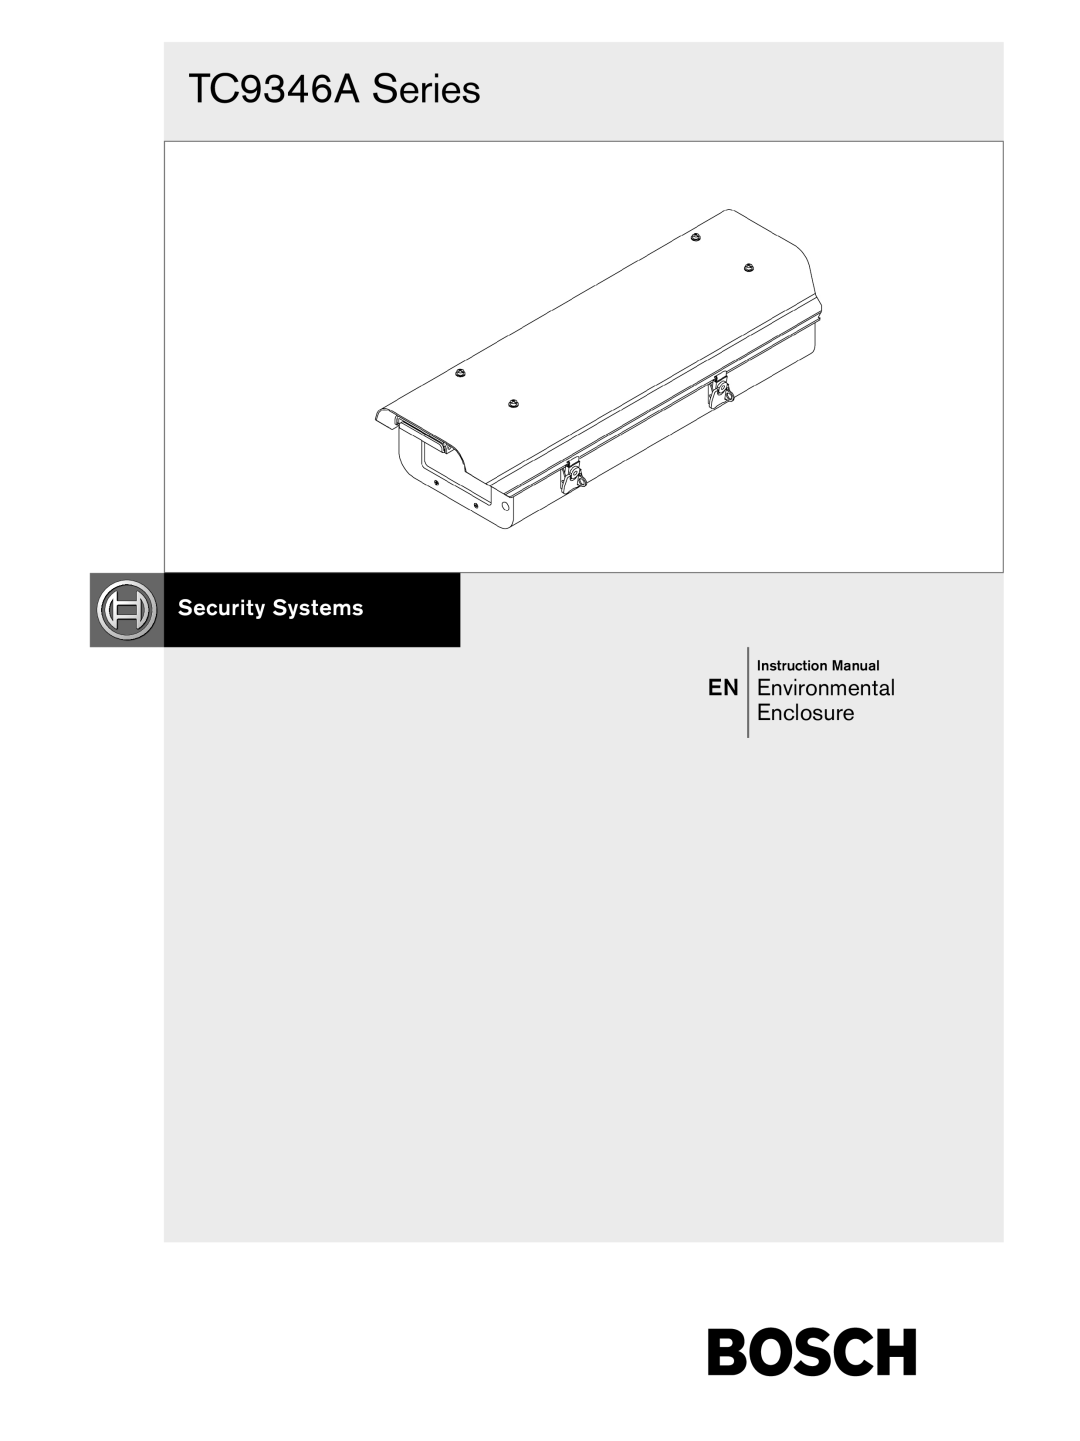 Bosch Appliances tc9346a instruction manual TC9346A Series, Environmental Enclosure 